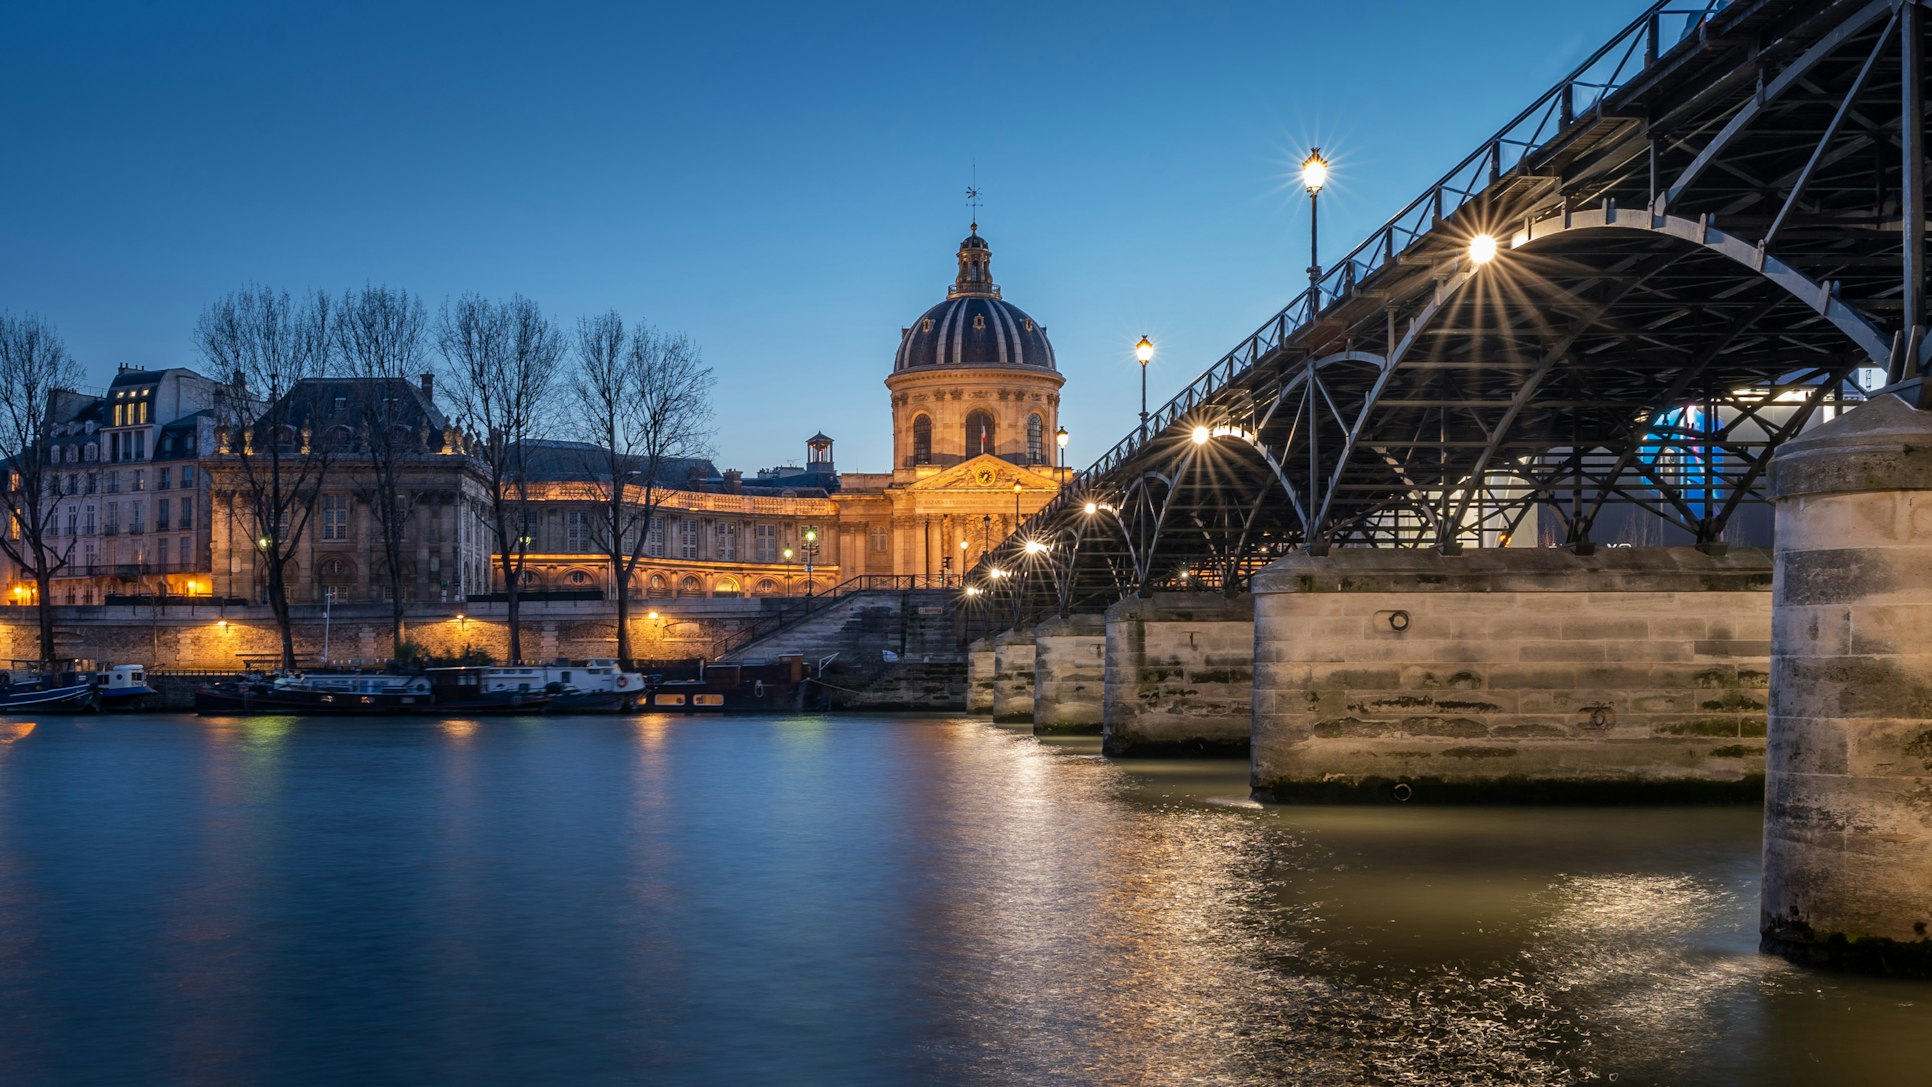 Pont des Arts or Lover's Bridge